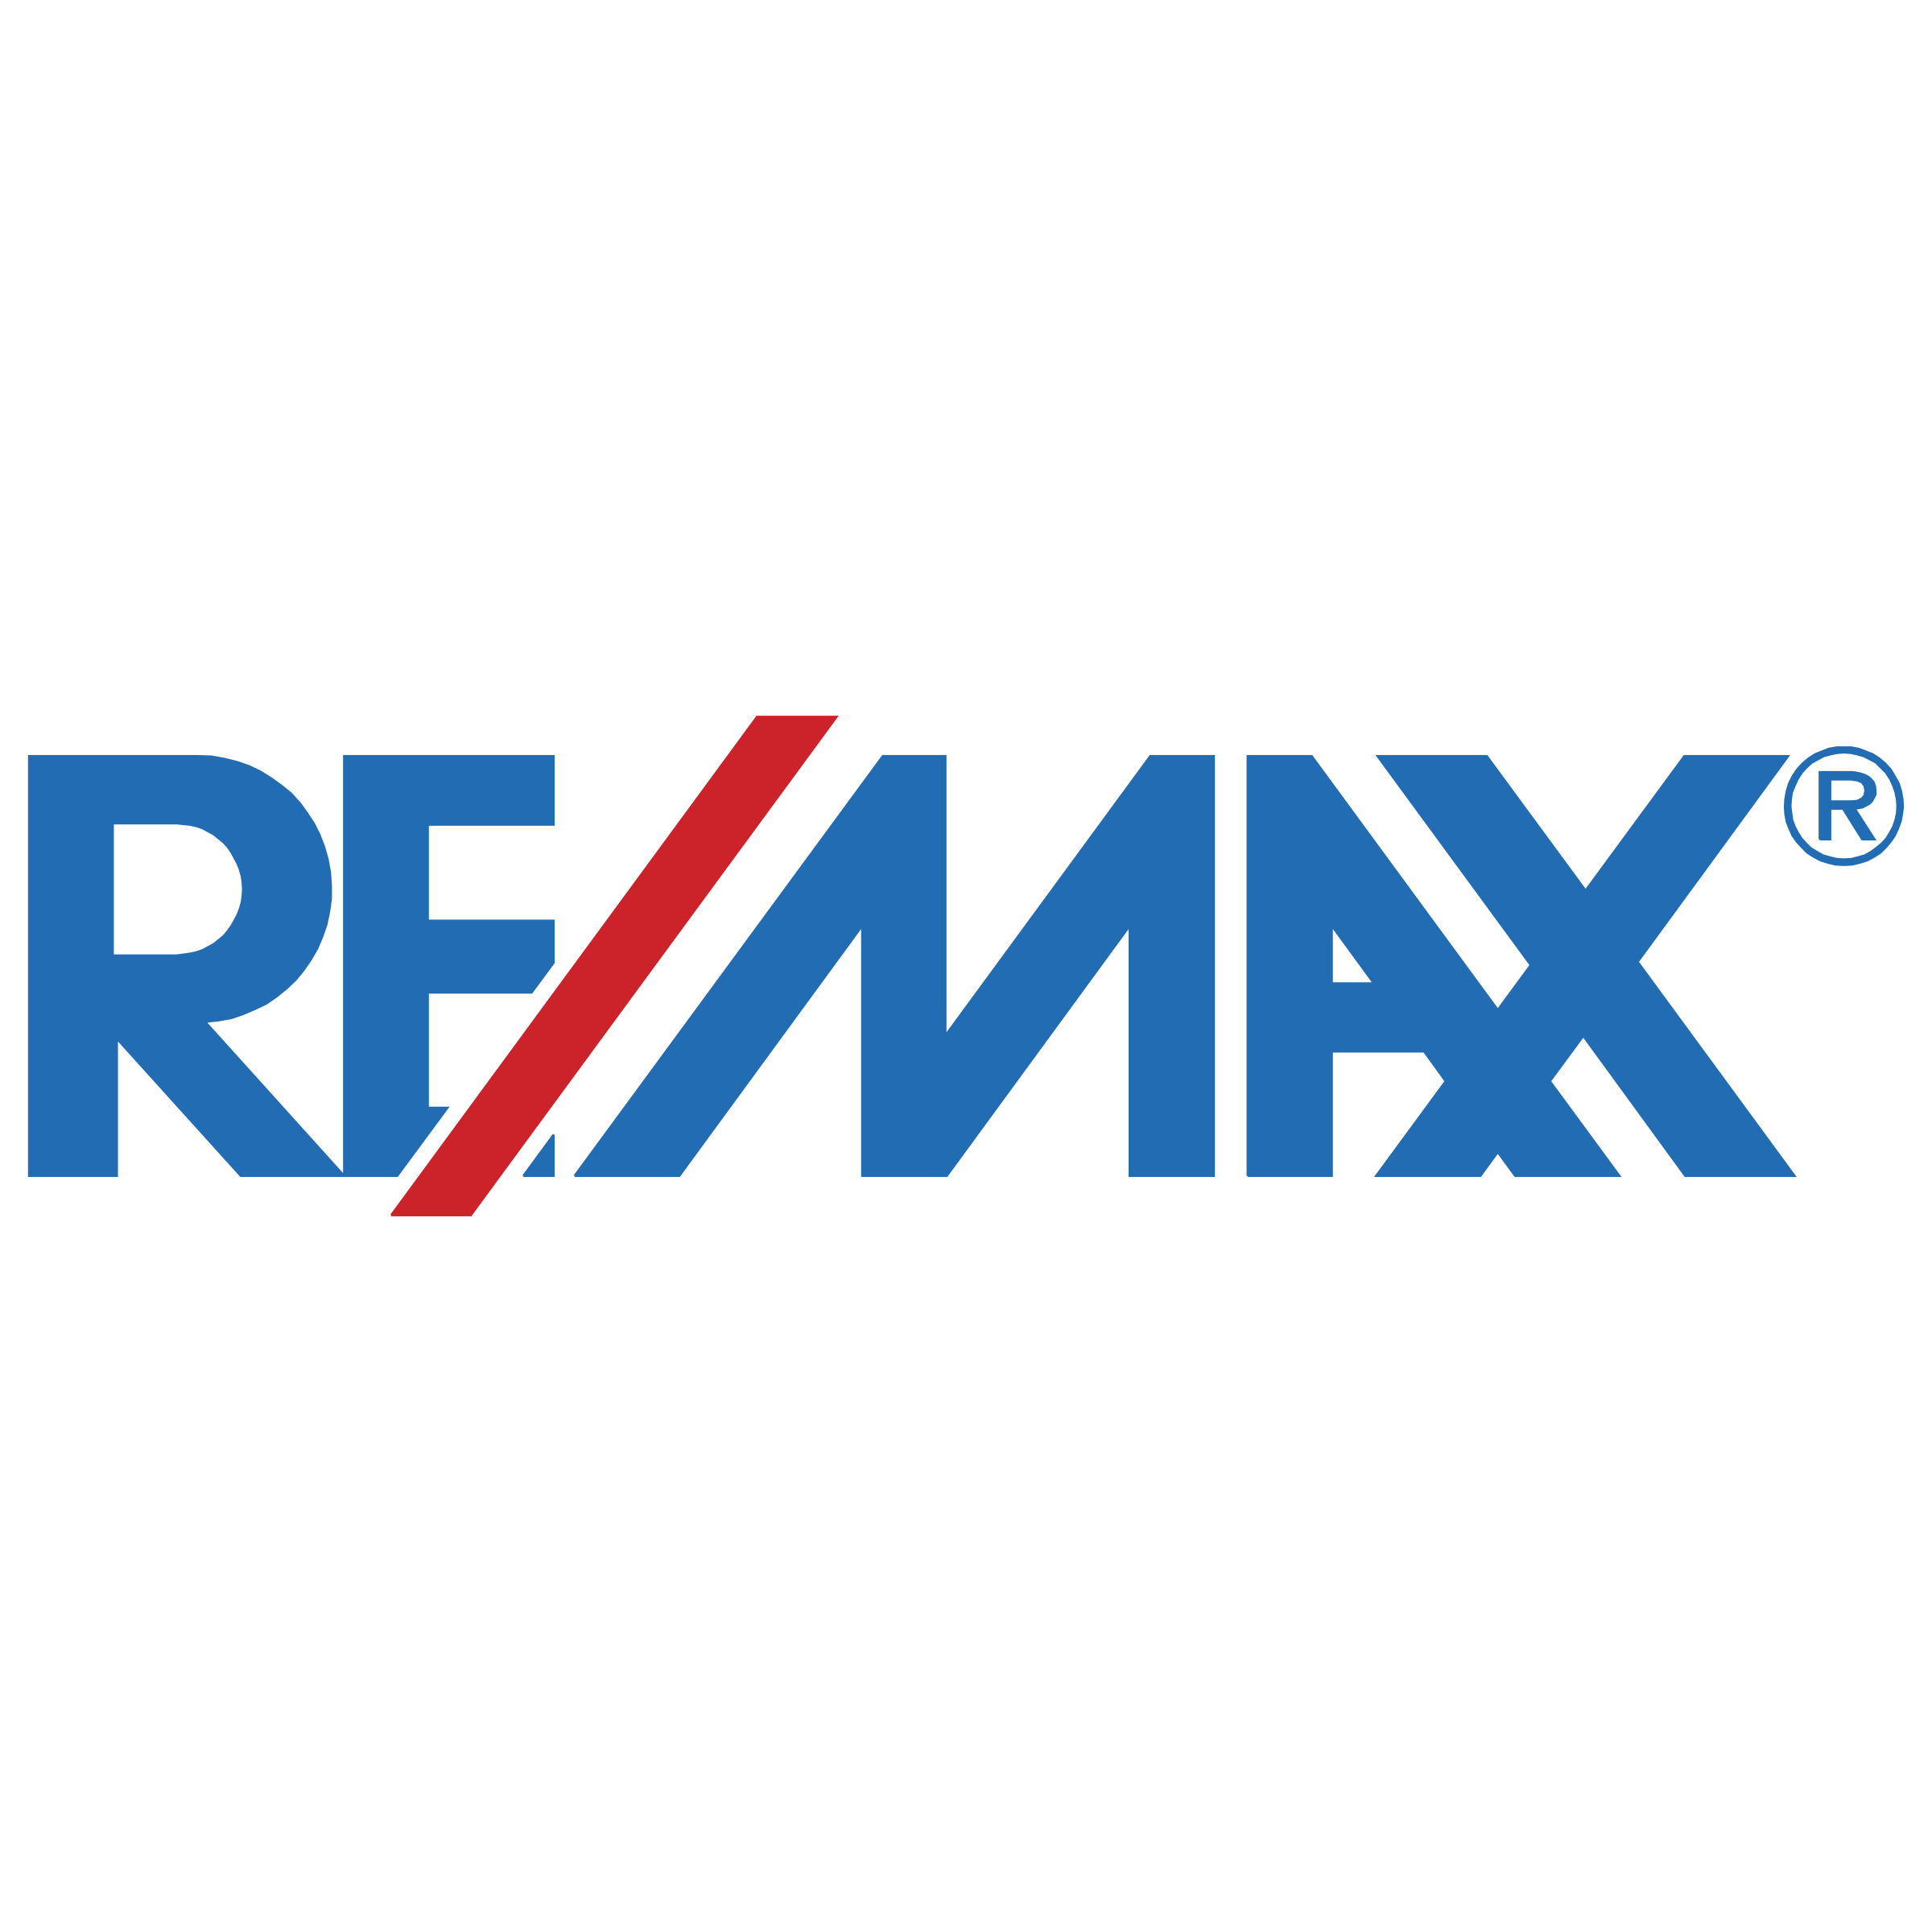 RE/MAX Logo - RE MAX Logo PNG Transparent & SVG Vector - Freebie Supply